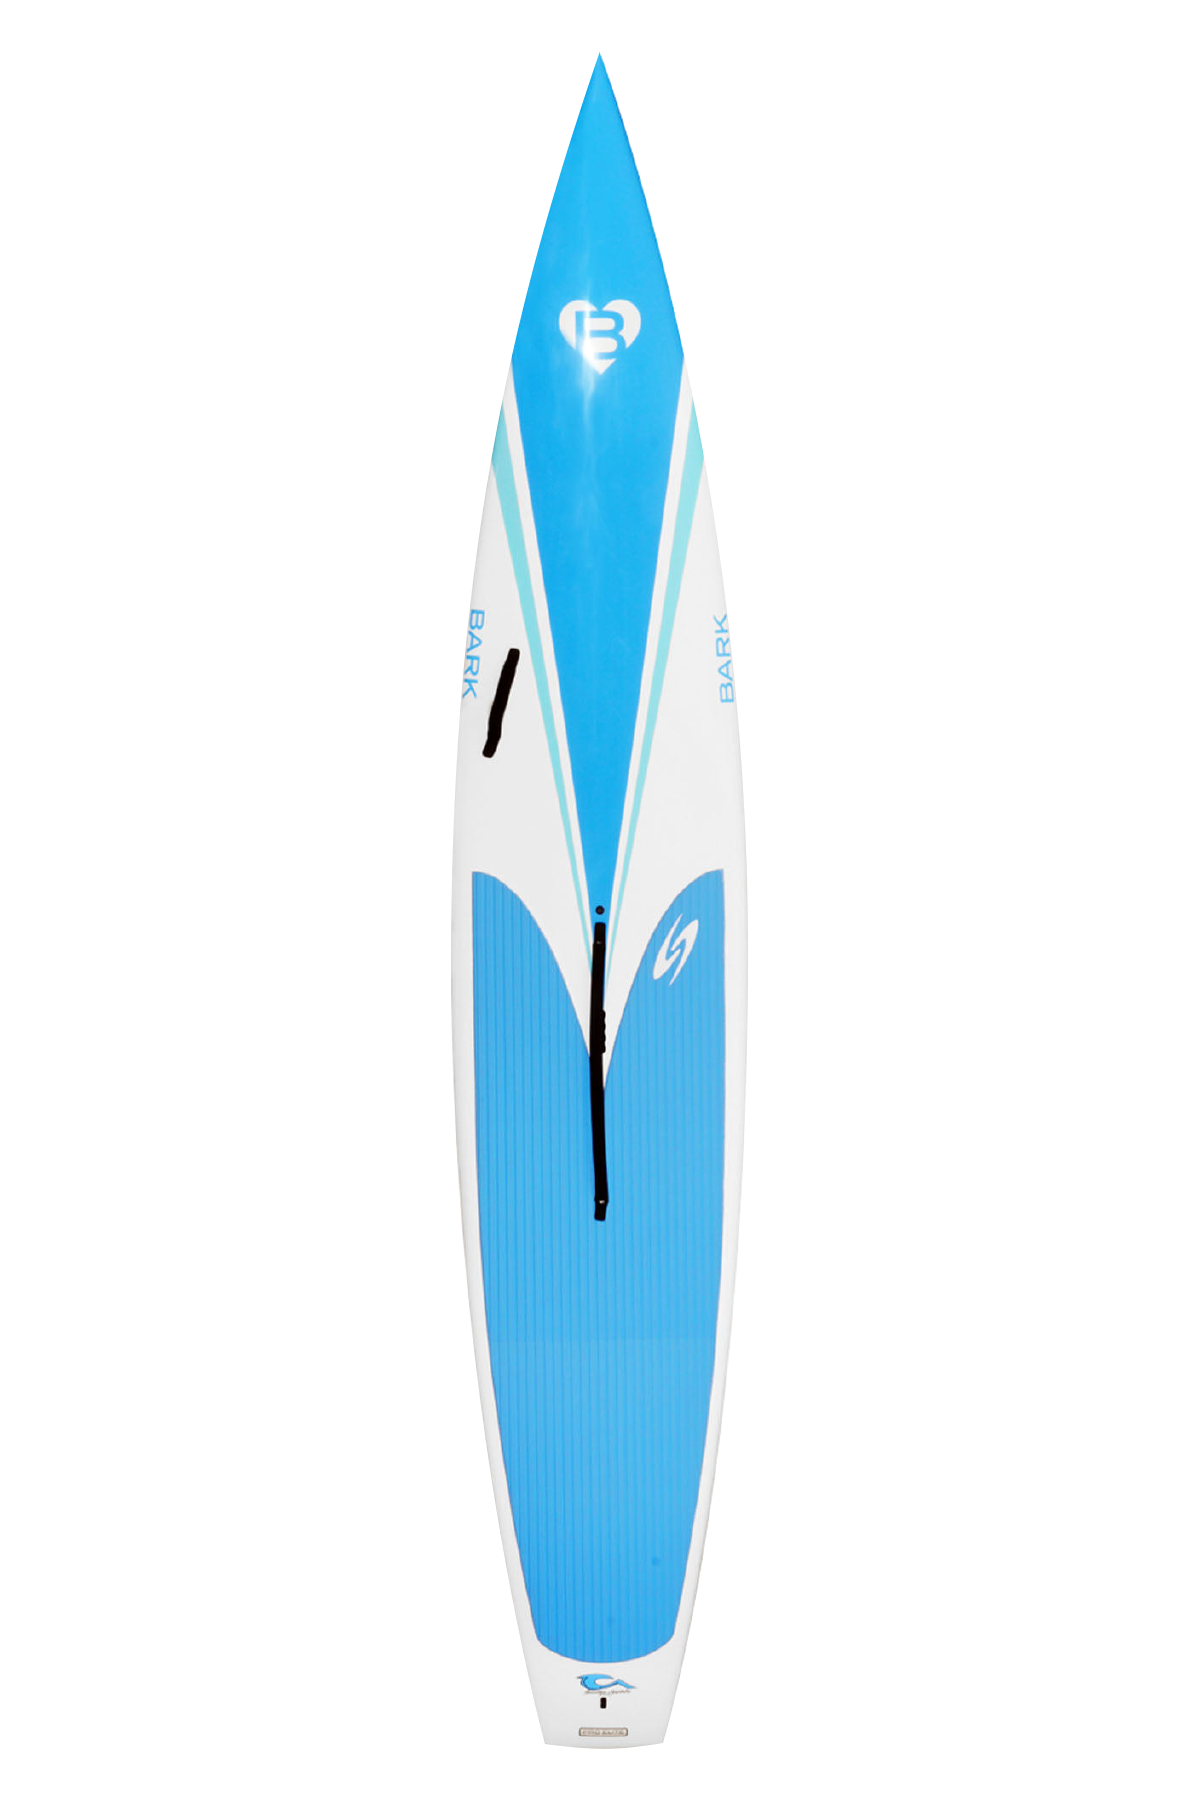 12 6 SURFTECH SUP APPLEBY RACE - BARK ELITE  - 27